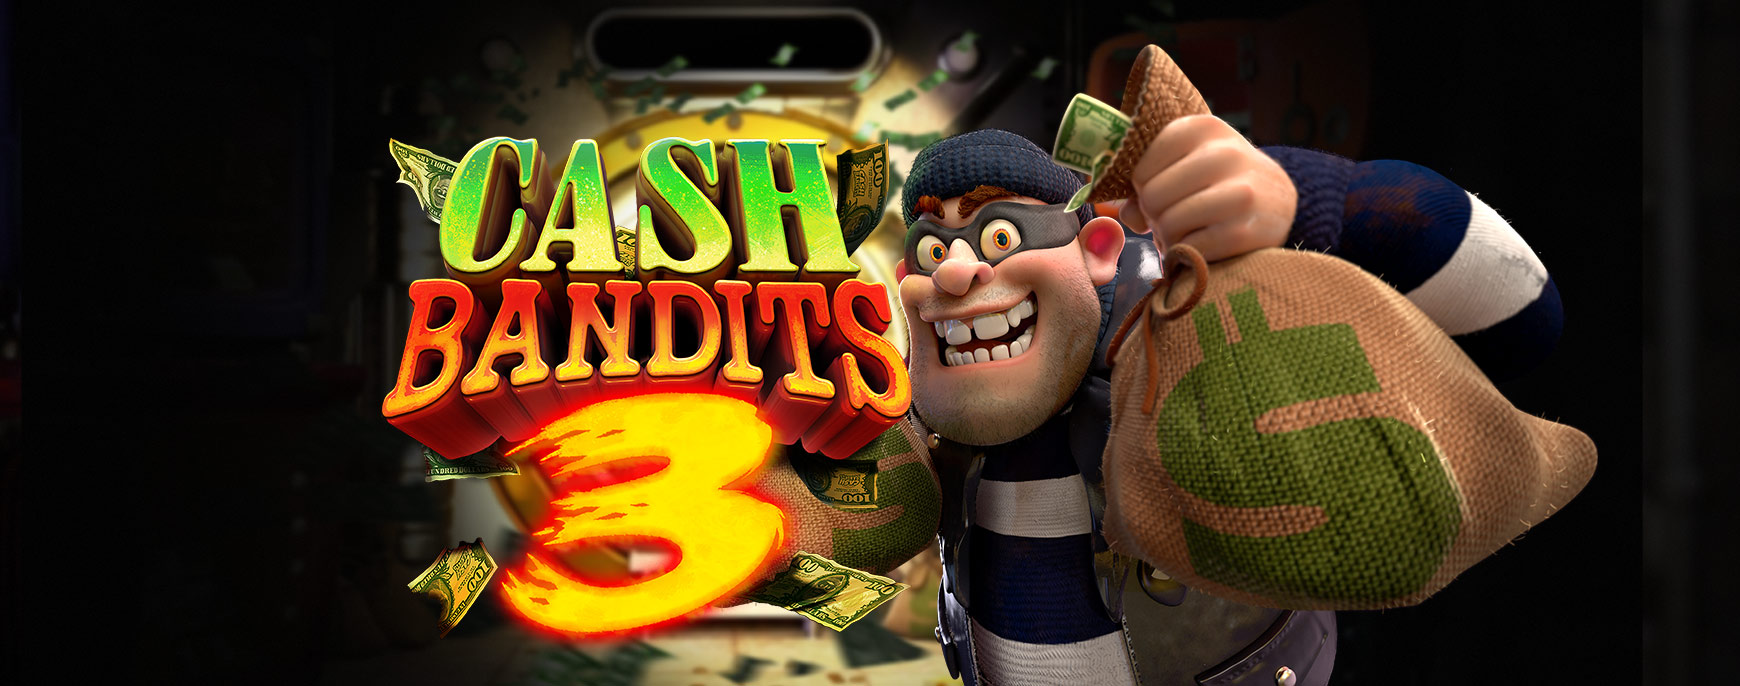 CashBandits3